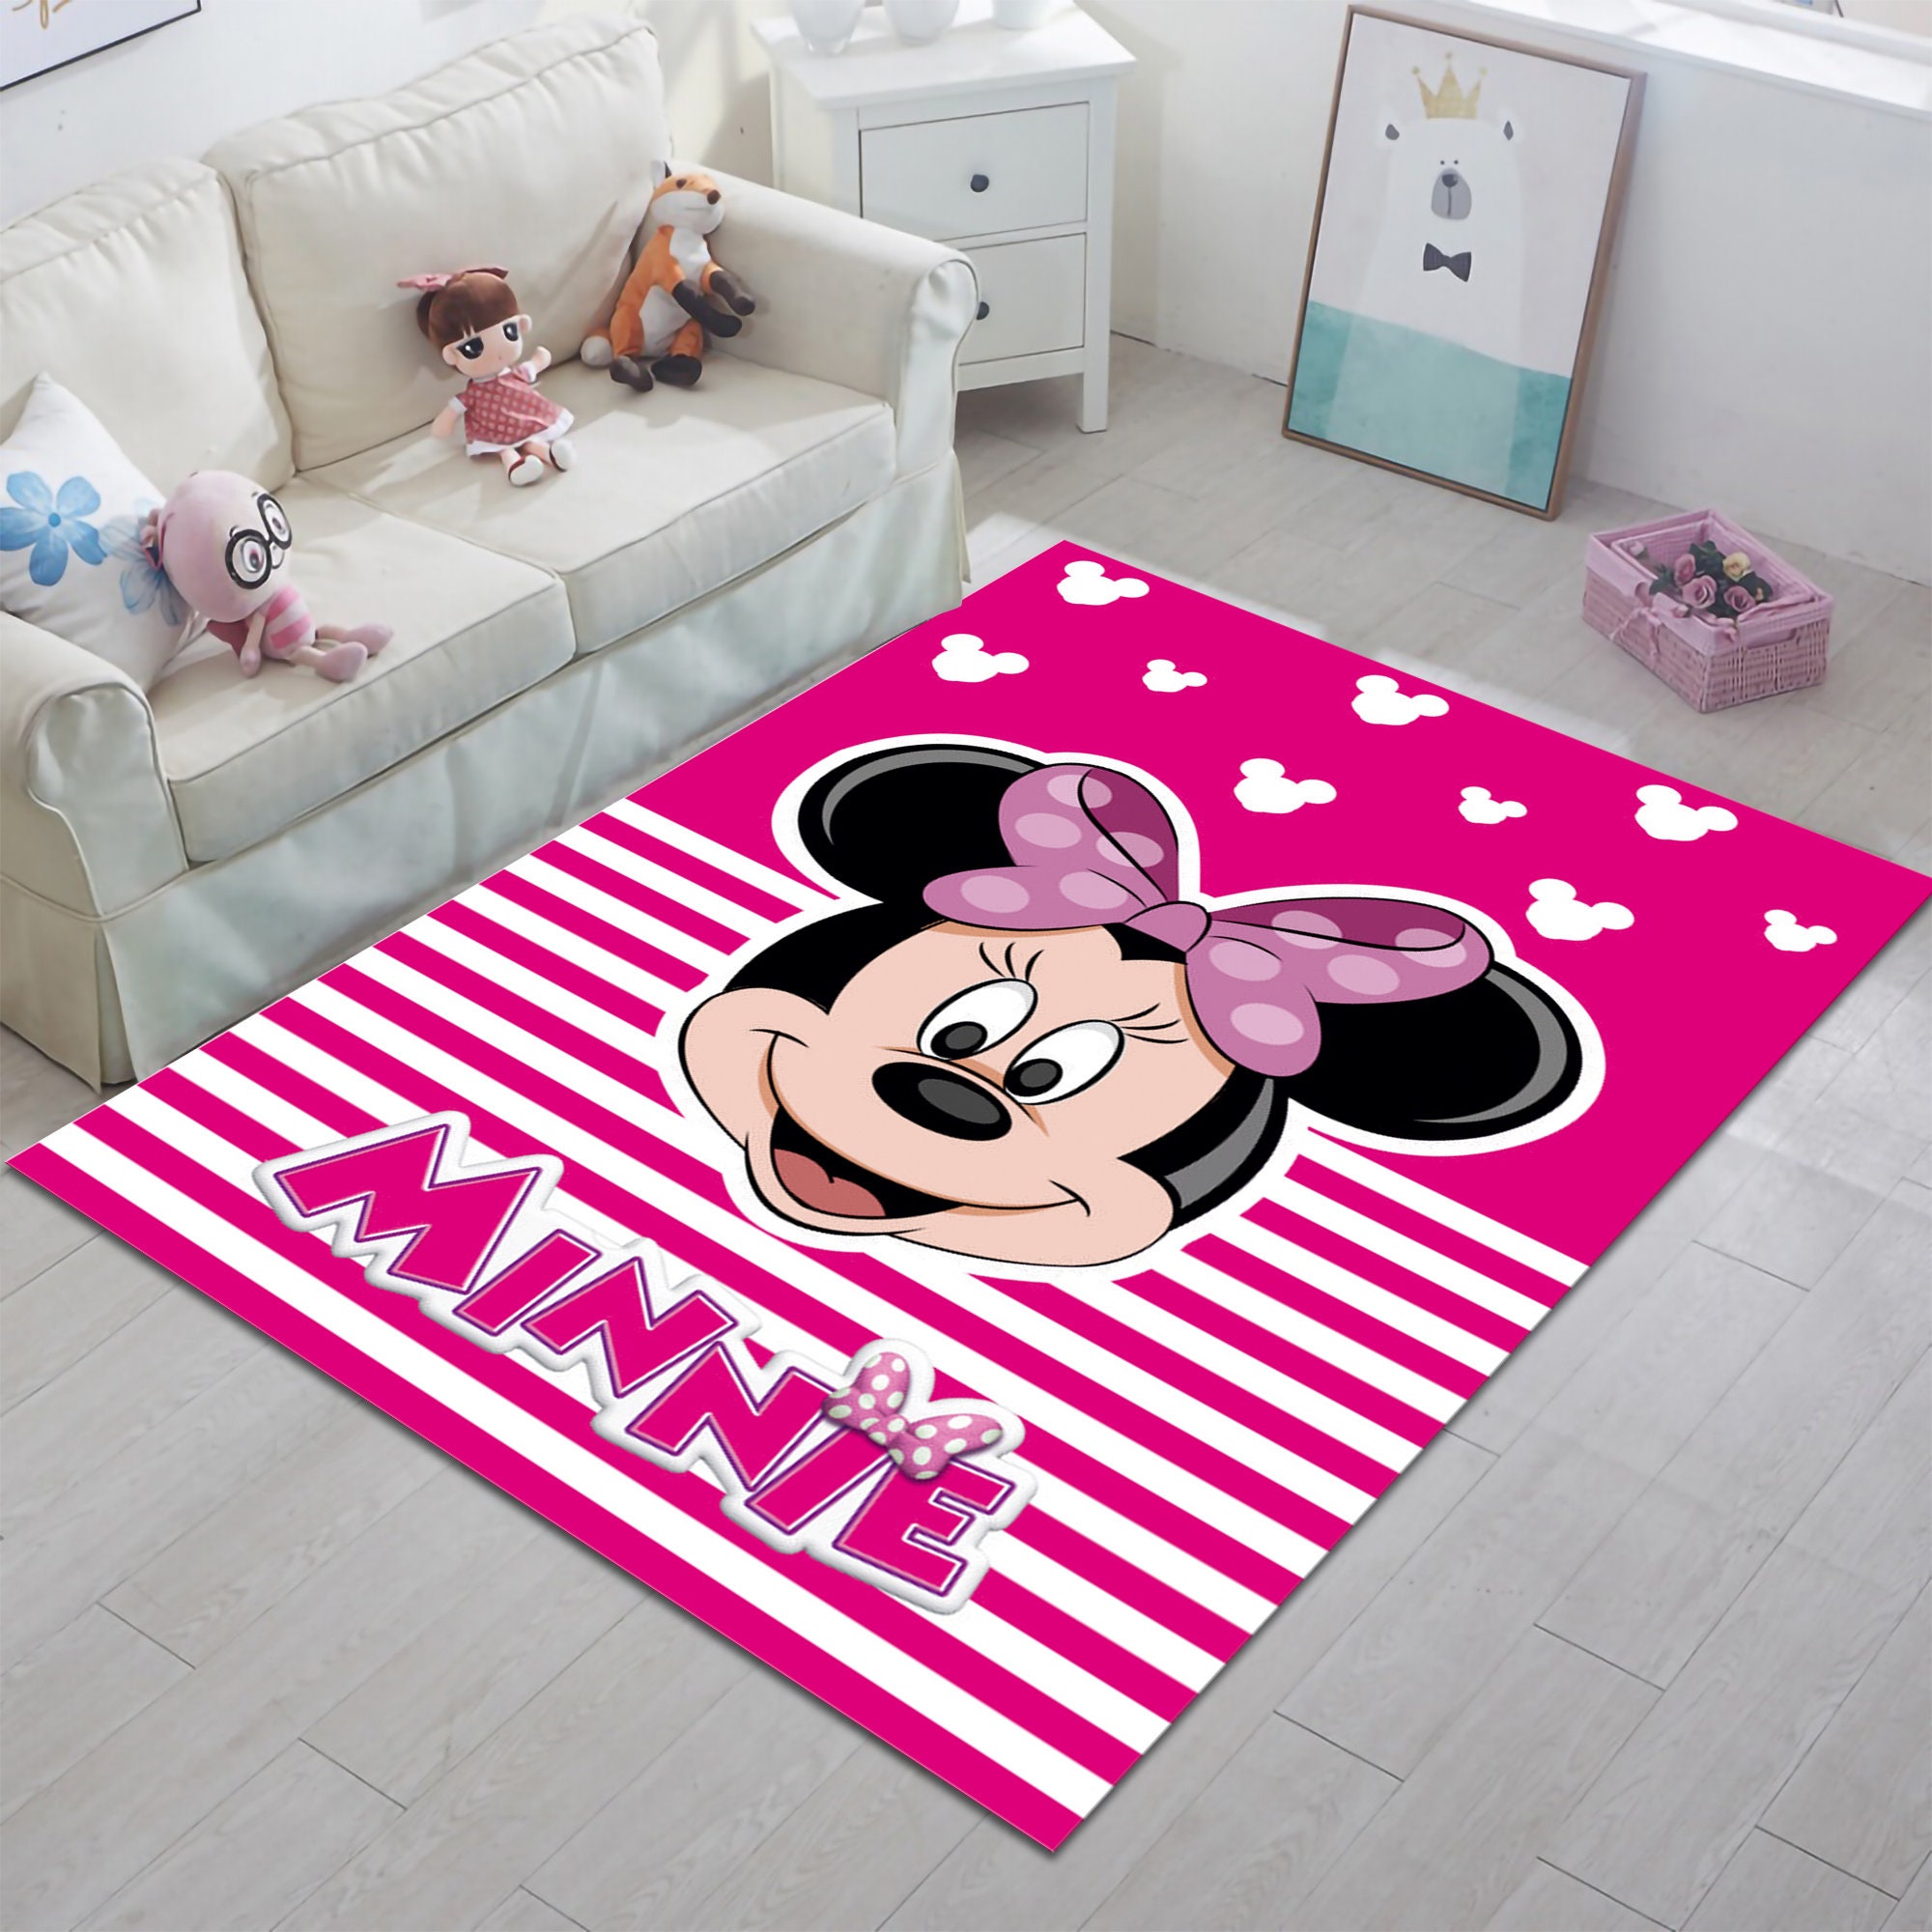 Discover Minnie Rug, Mouse Rug, Cartoon Rug, Gift for Daughter, Pink Rug, Kids Room Rug, Nursery Decor, Kids Decor, Cute Rug